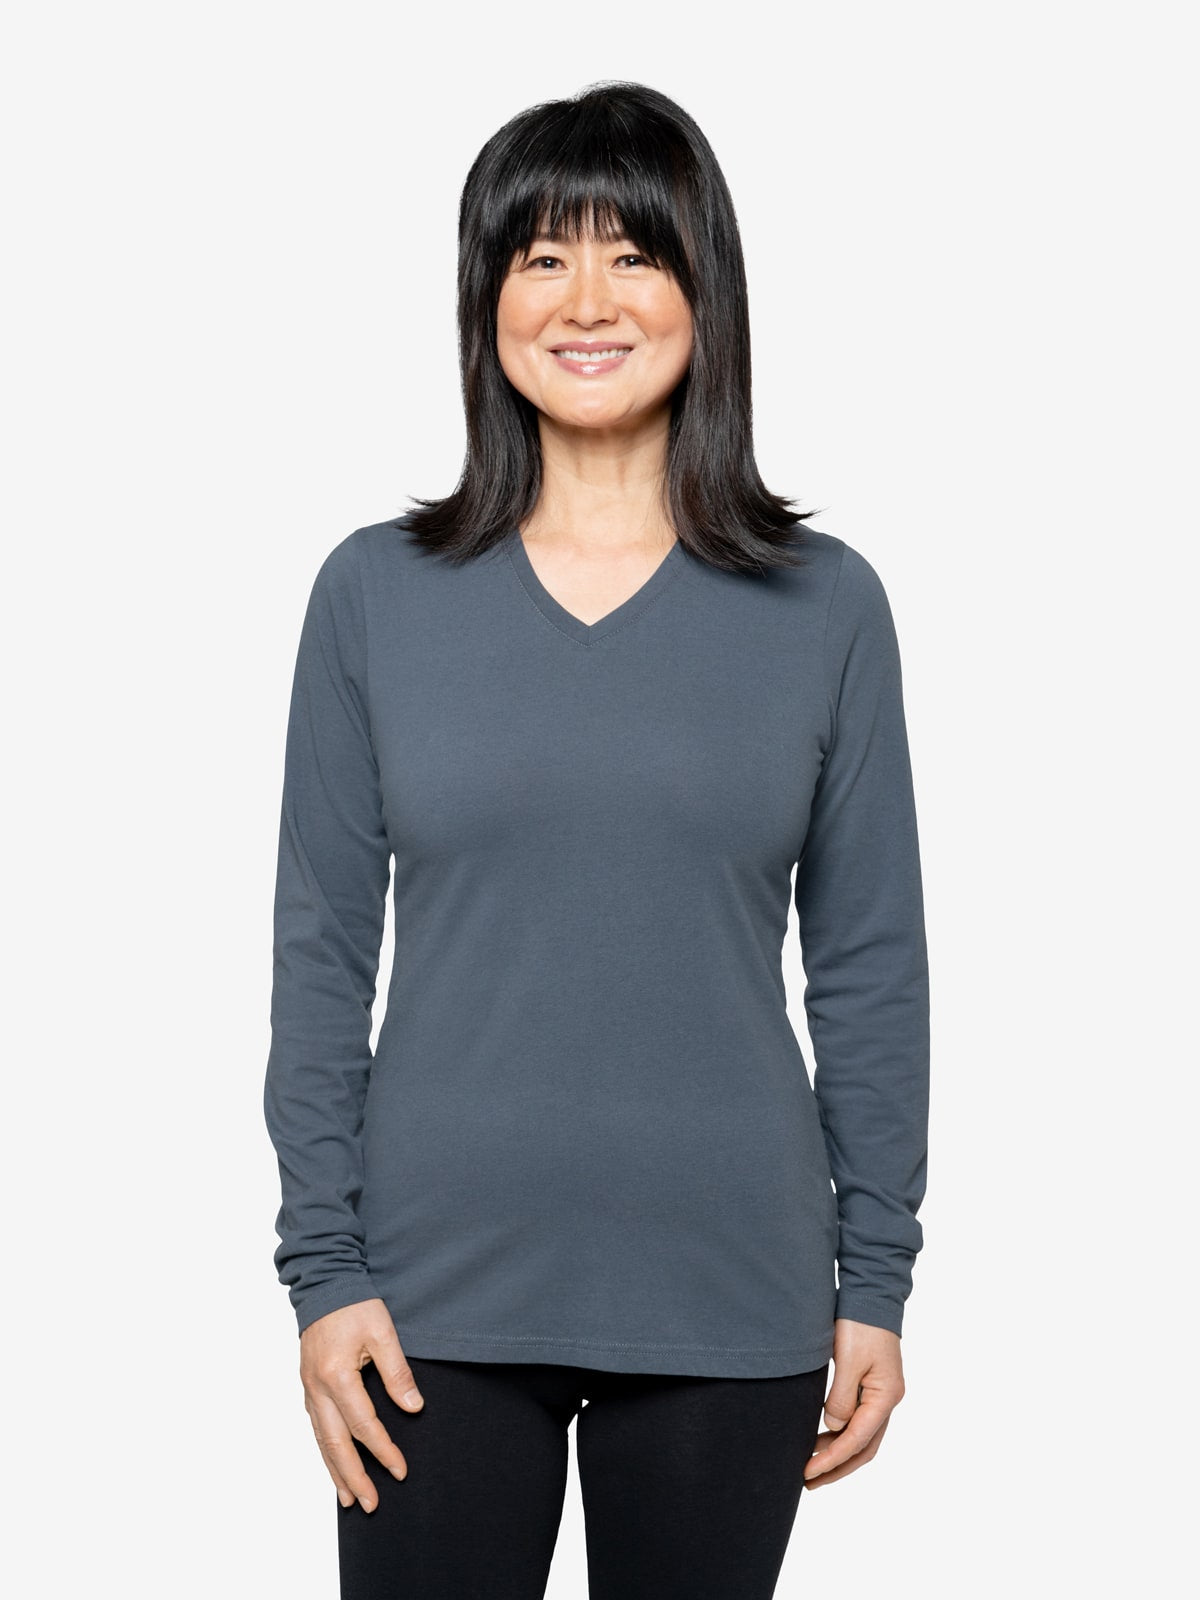 W's Insect Shield UPF Dri-Balance Long Sleeve V-Neck T-Shirt